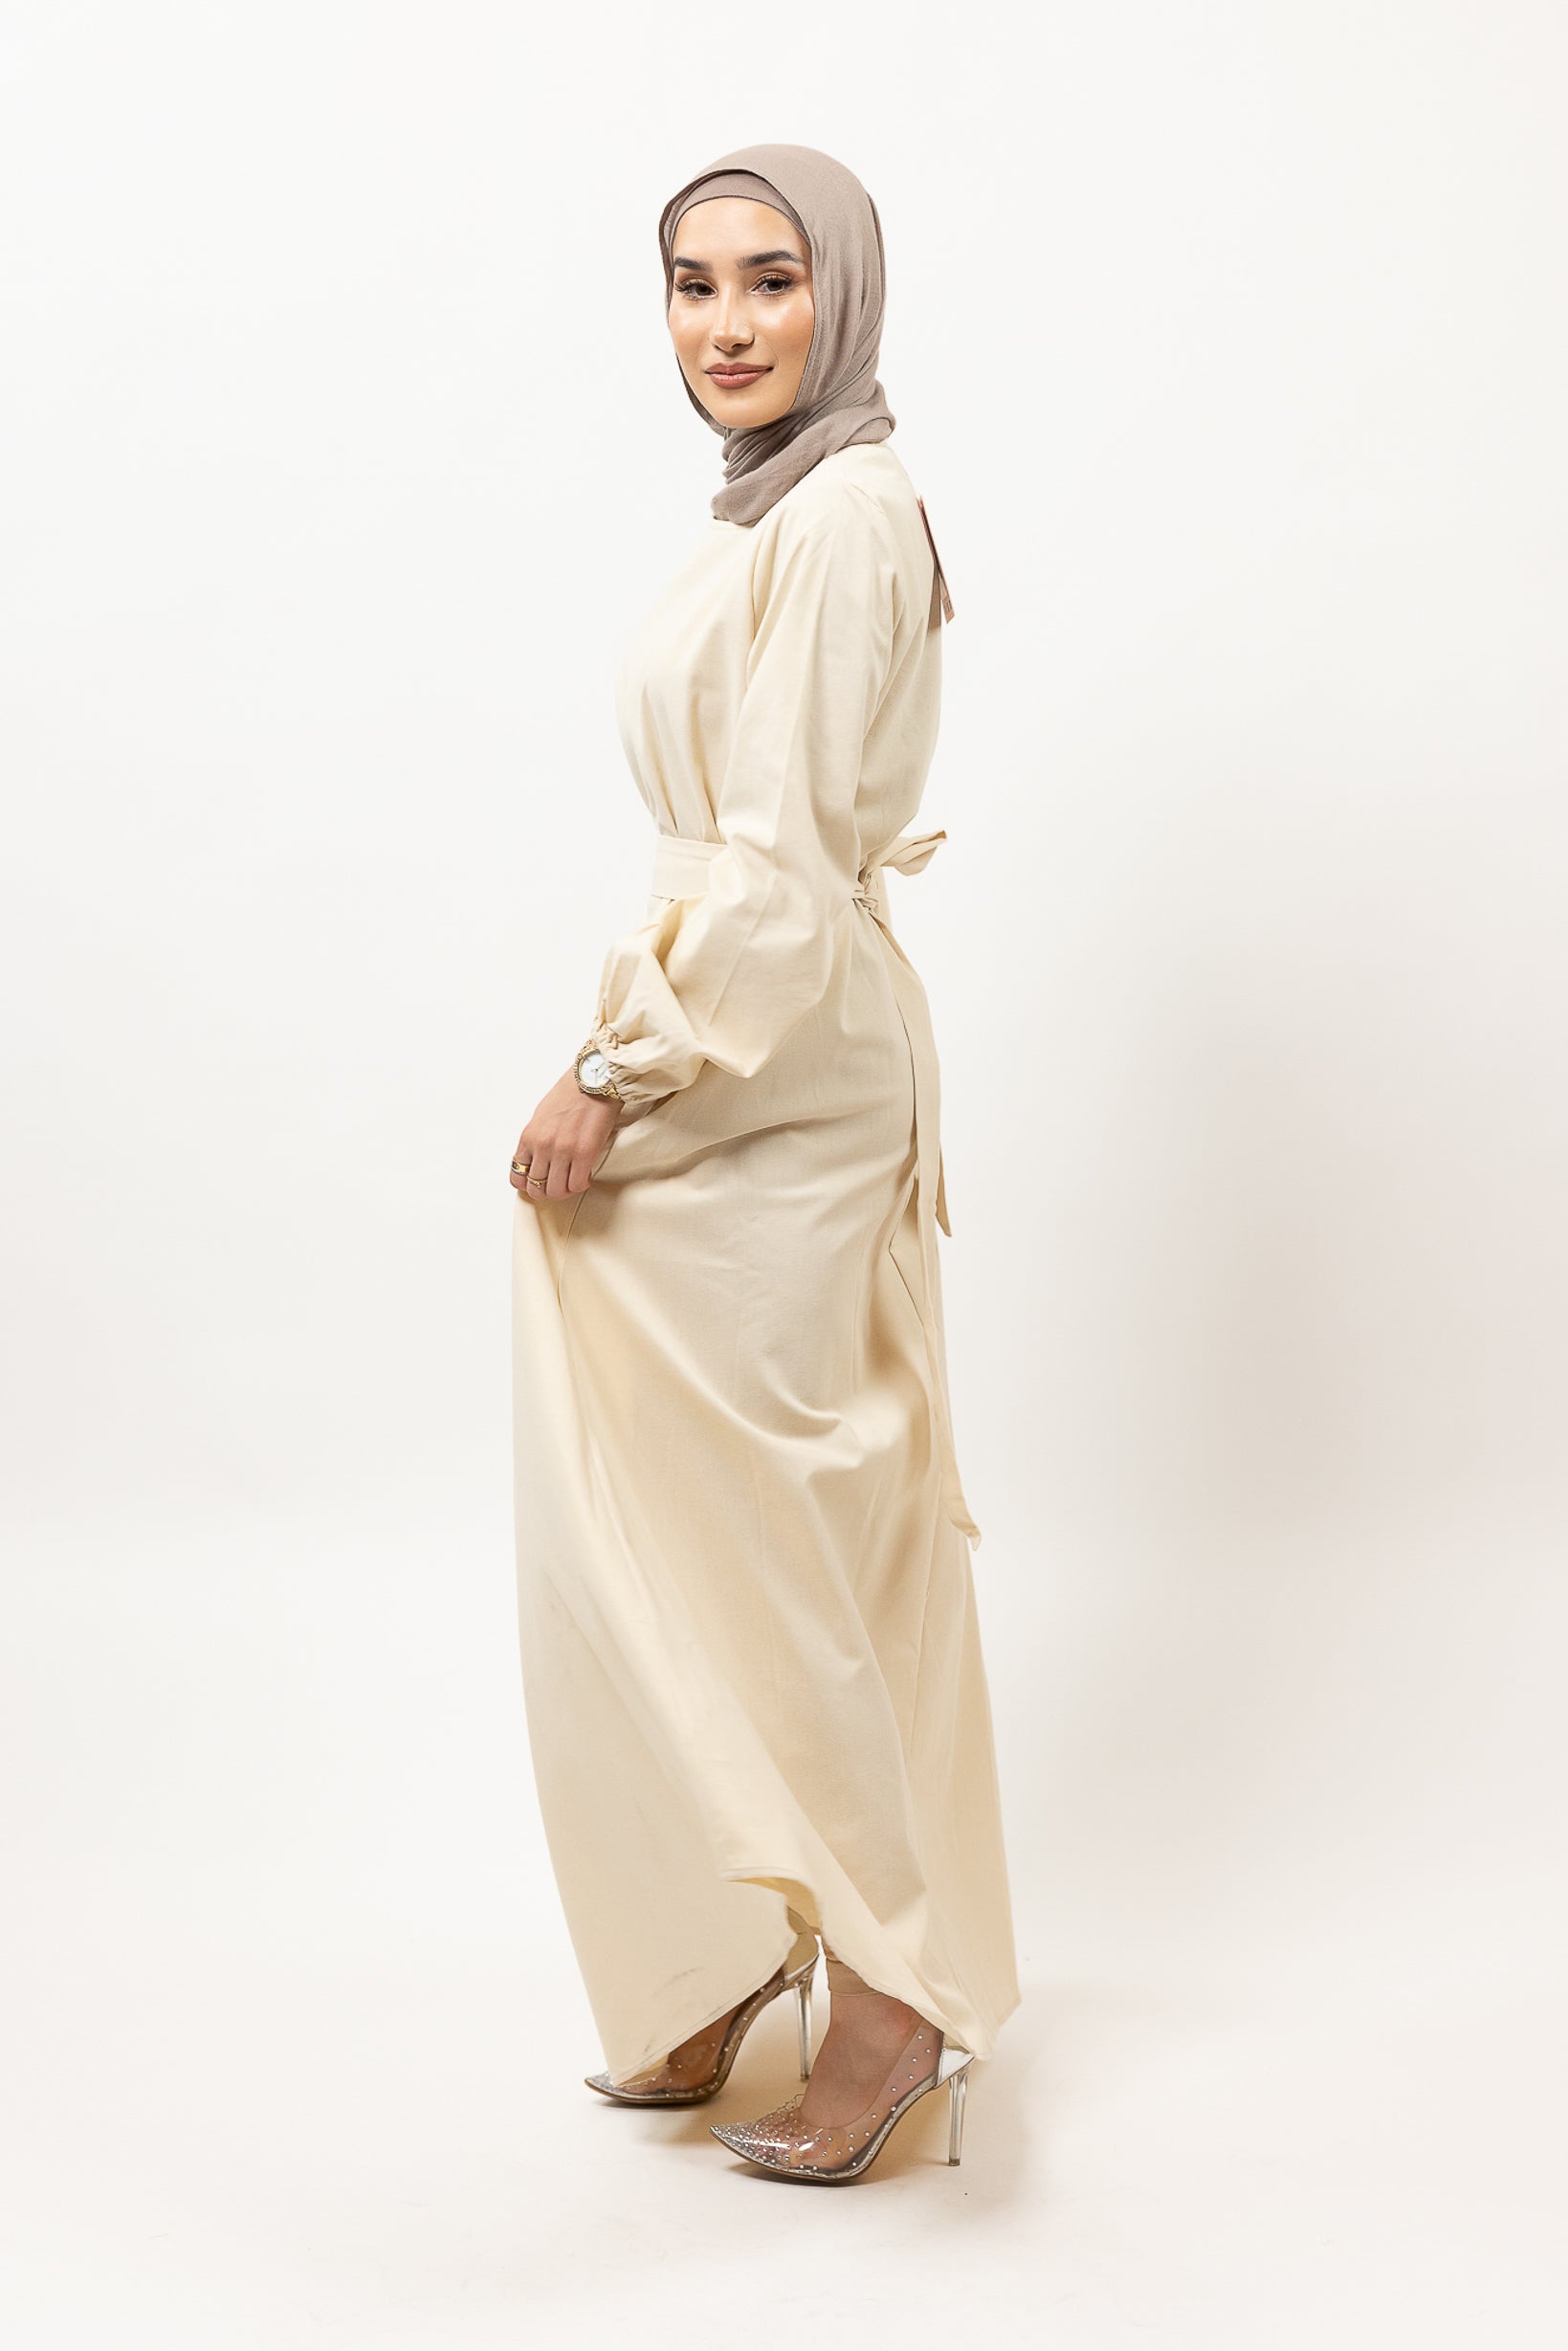 M8391Beige-dress-abaya